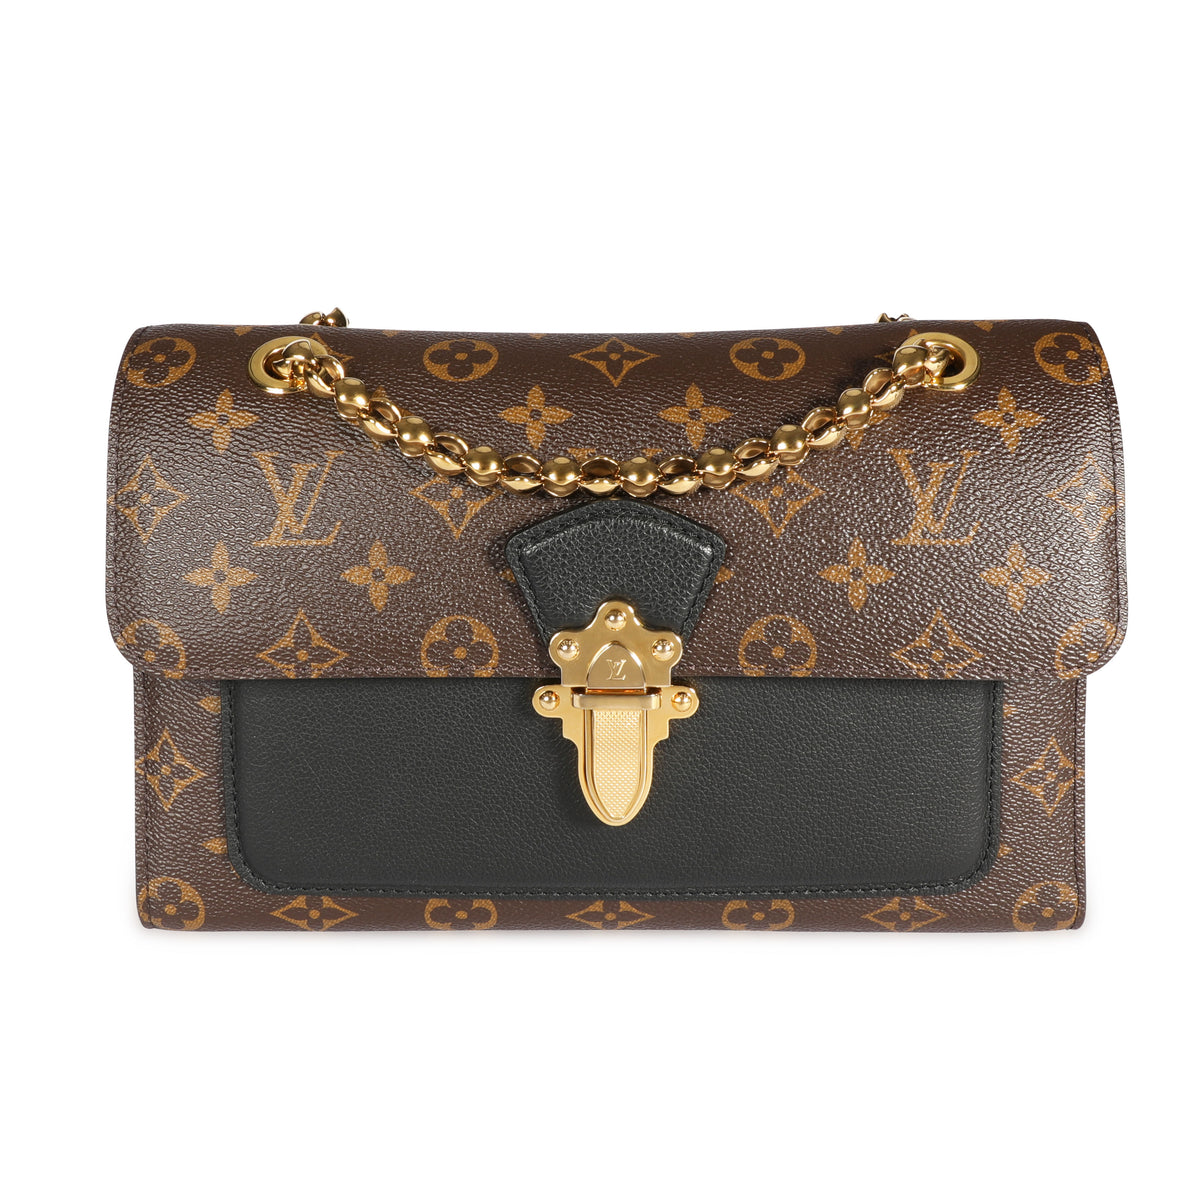 Louis Vuitton Clutch Bags & Women's Certificate of Authenticity